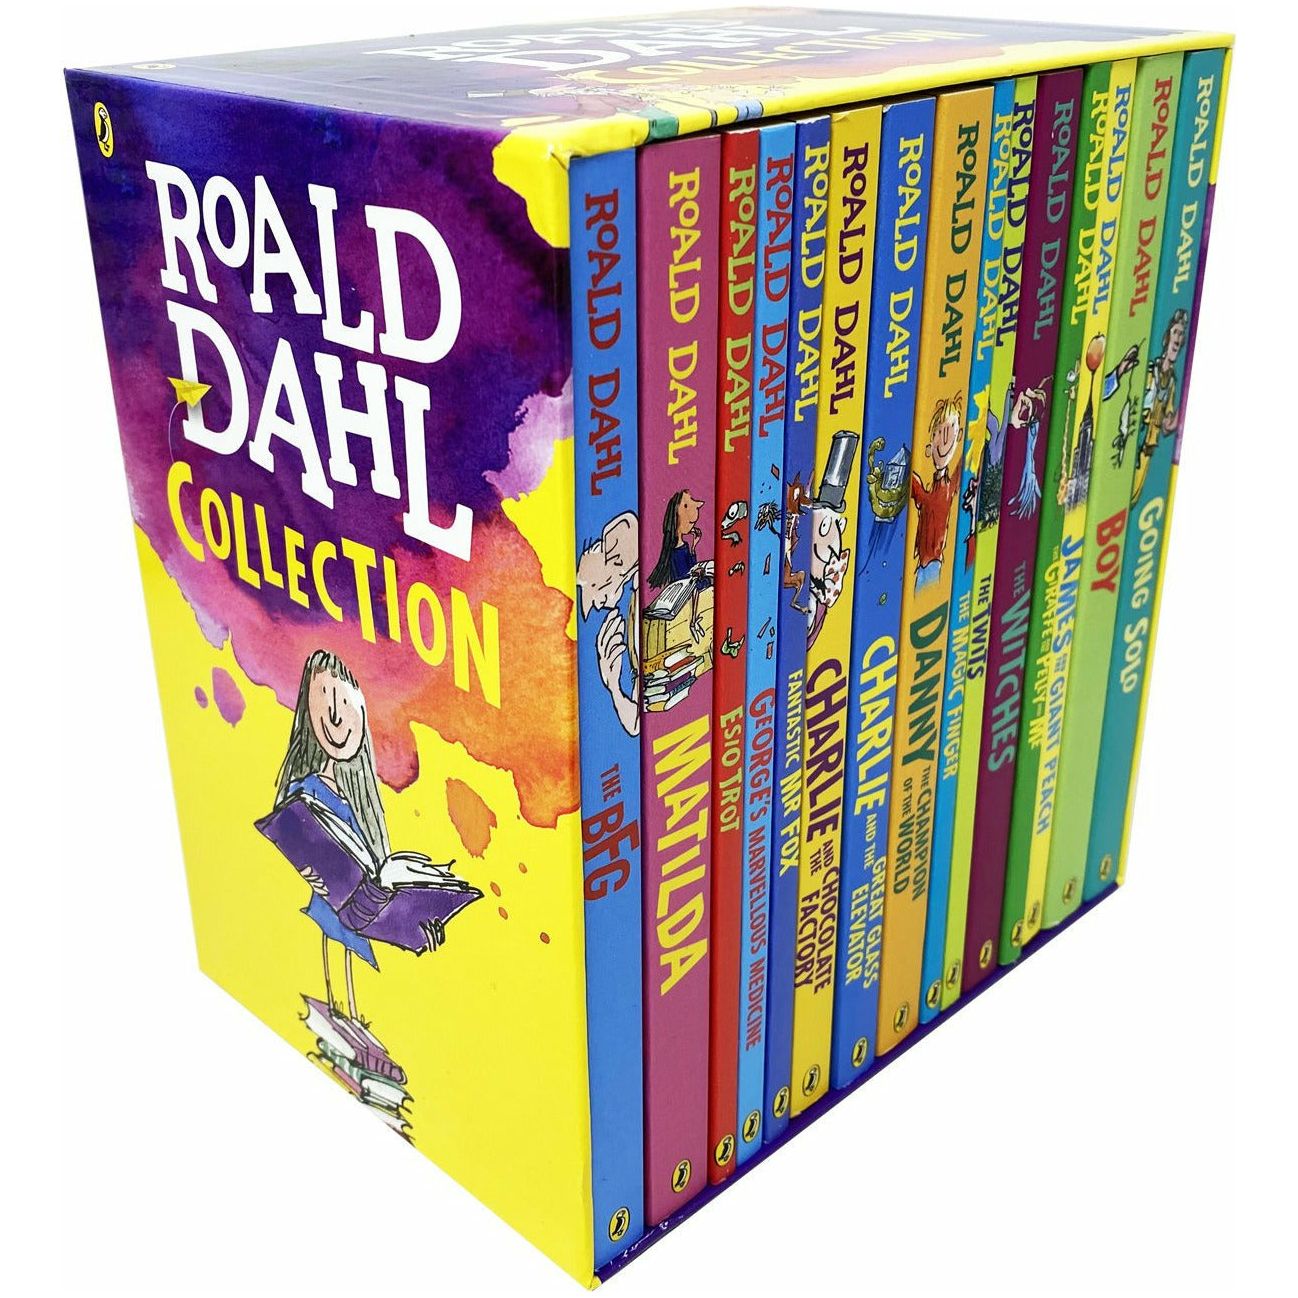 Roald Dahl Collection 15 Books Box Set (Roald Dahl Books)